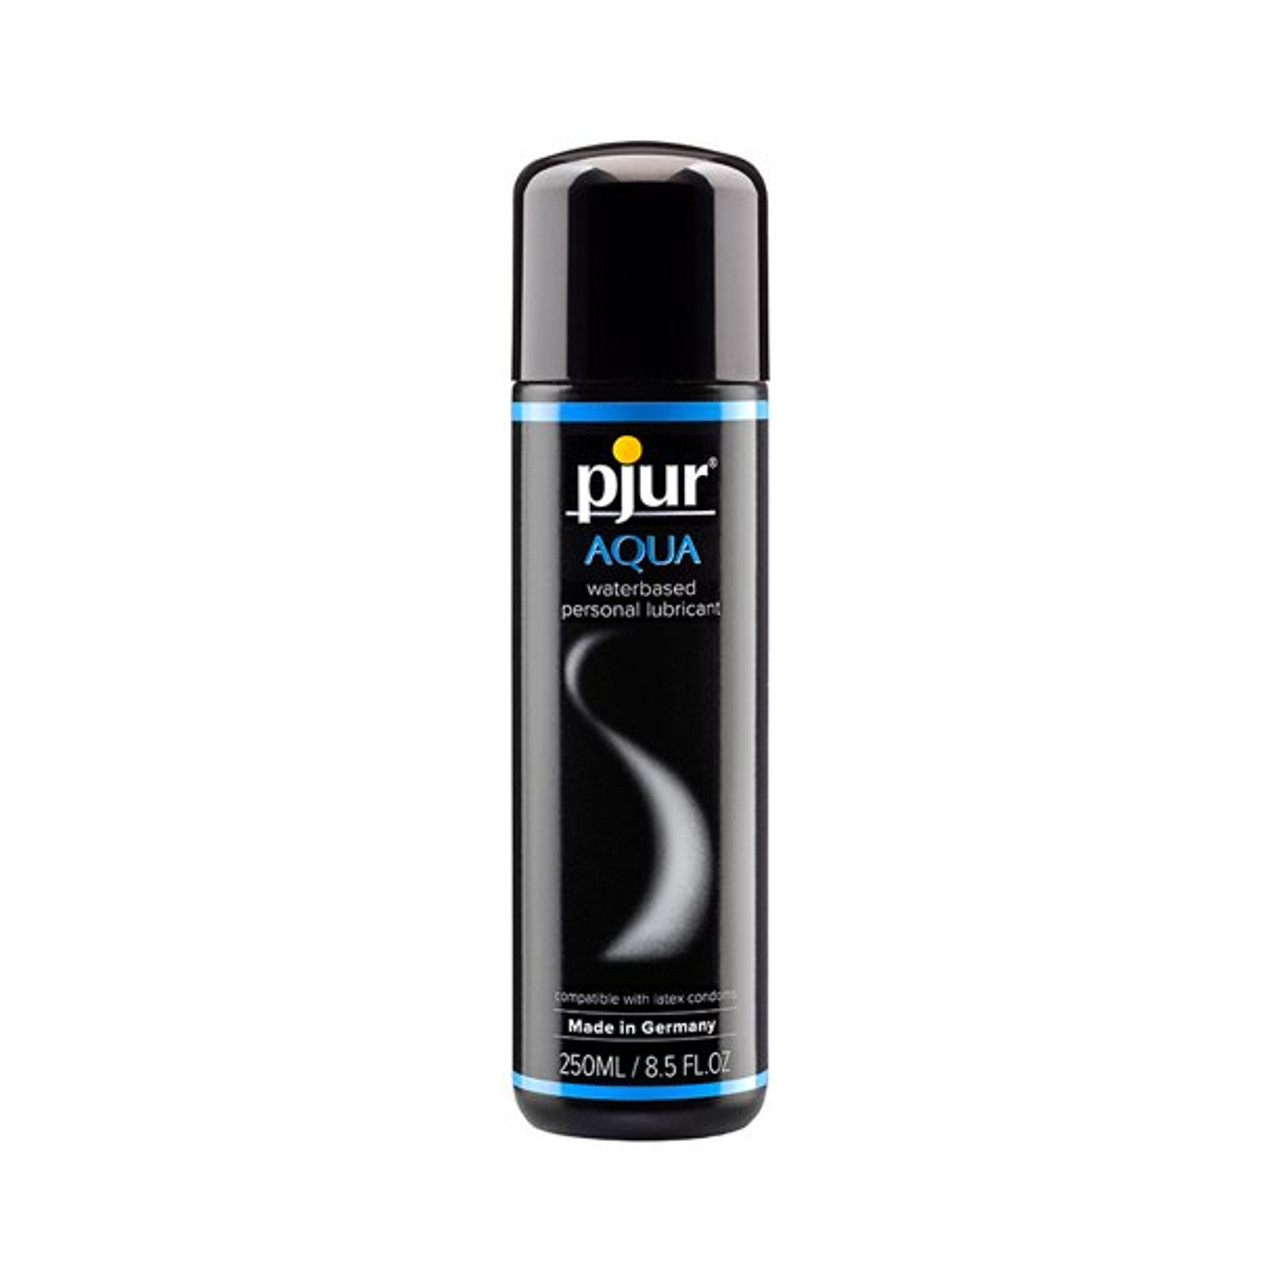 Pjur Aqua Personal Lubricant | Buy Pjur Lubricants online with Condom Depot